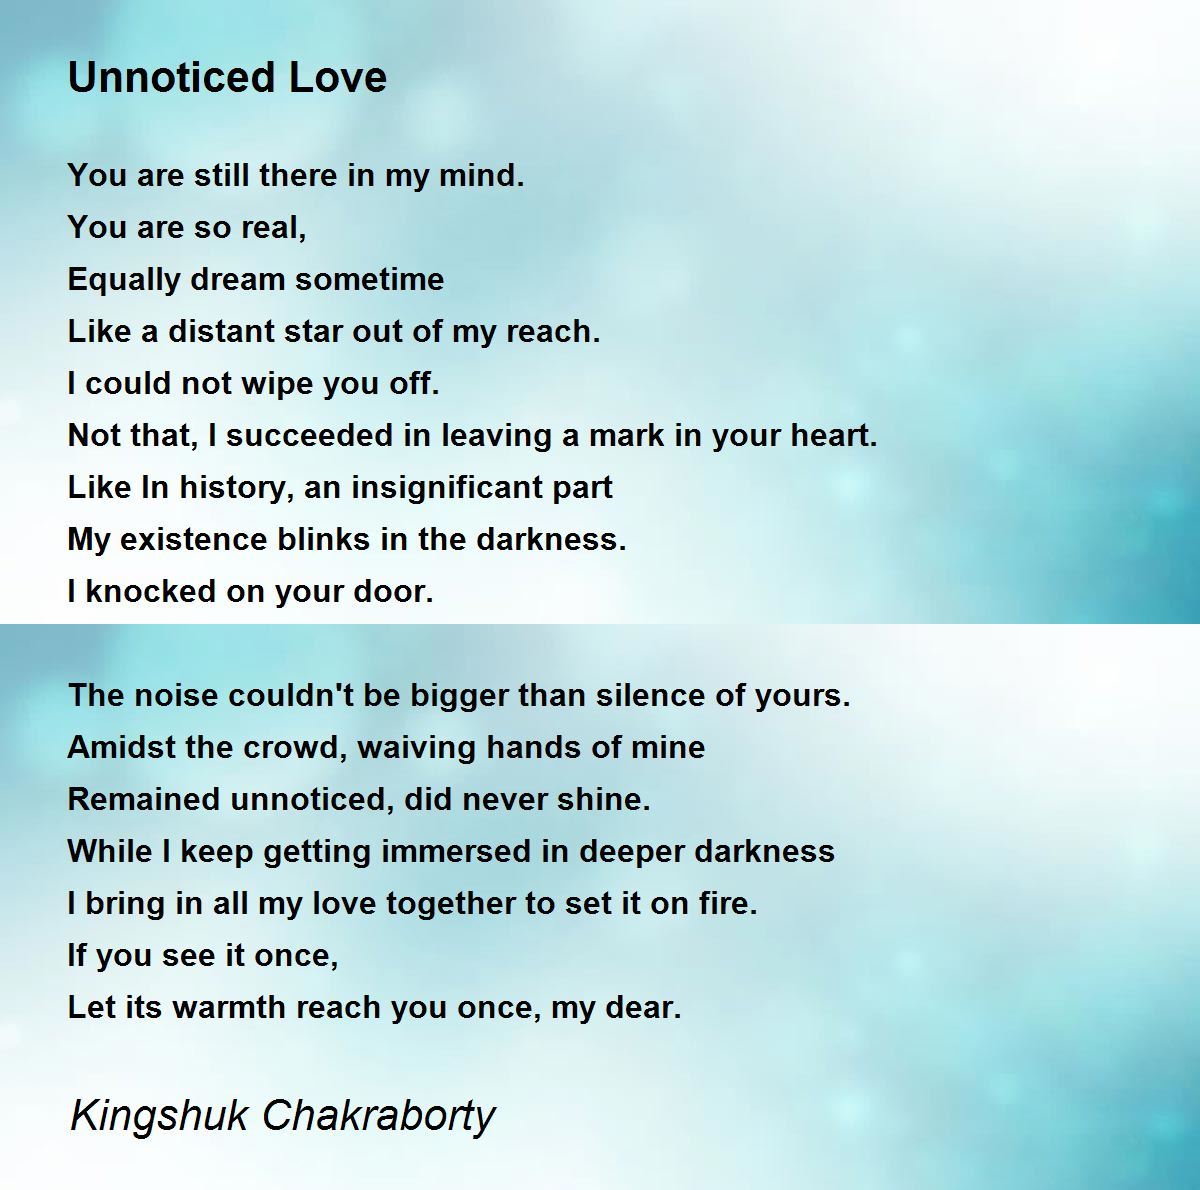 Unnoticed Love - Unnoticed Love Poem by Kingshuk Chakraborty